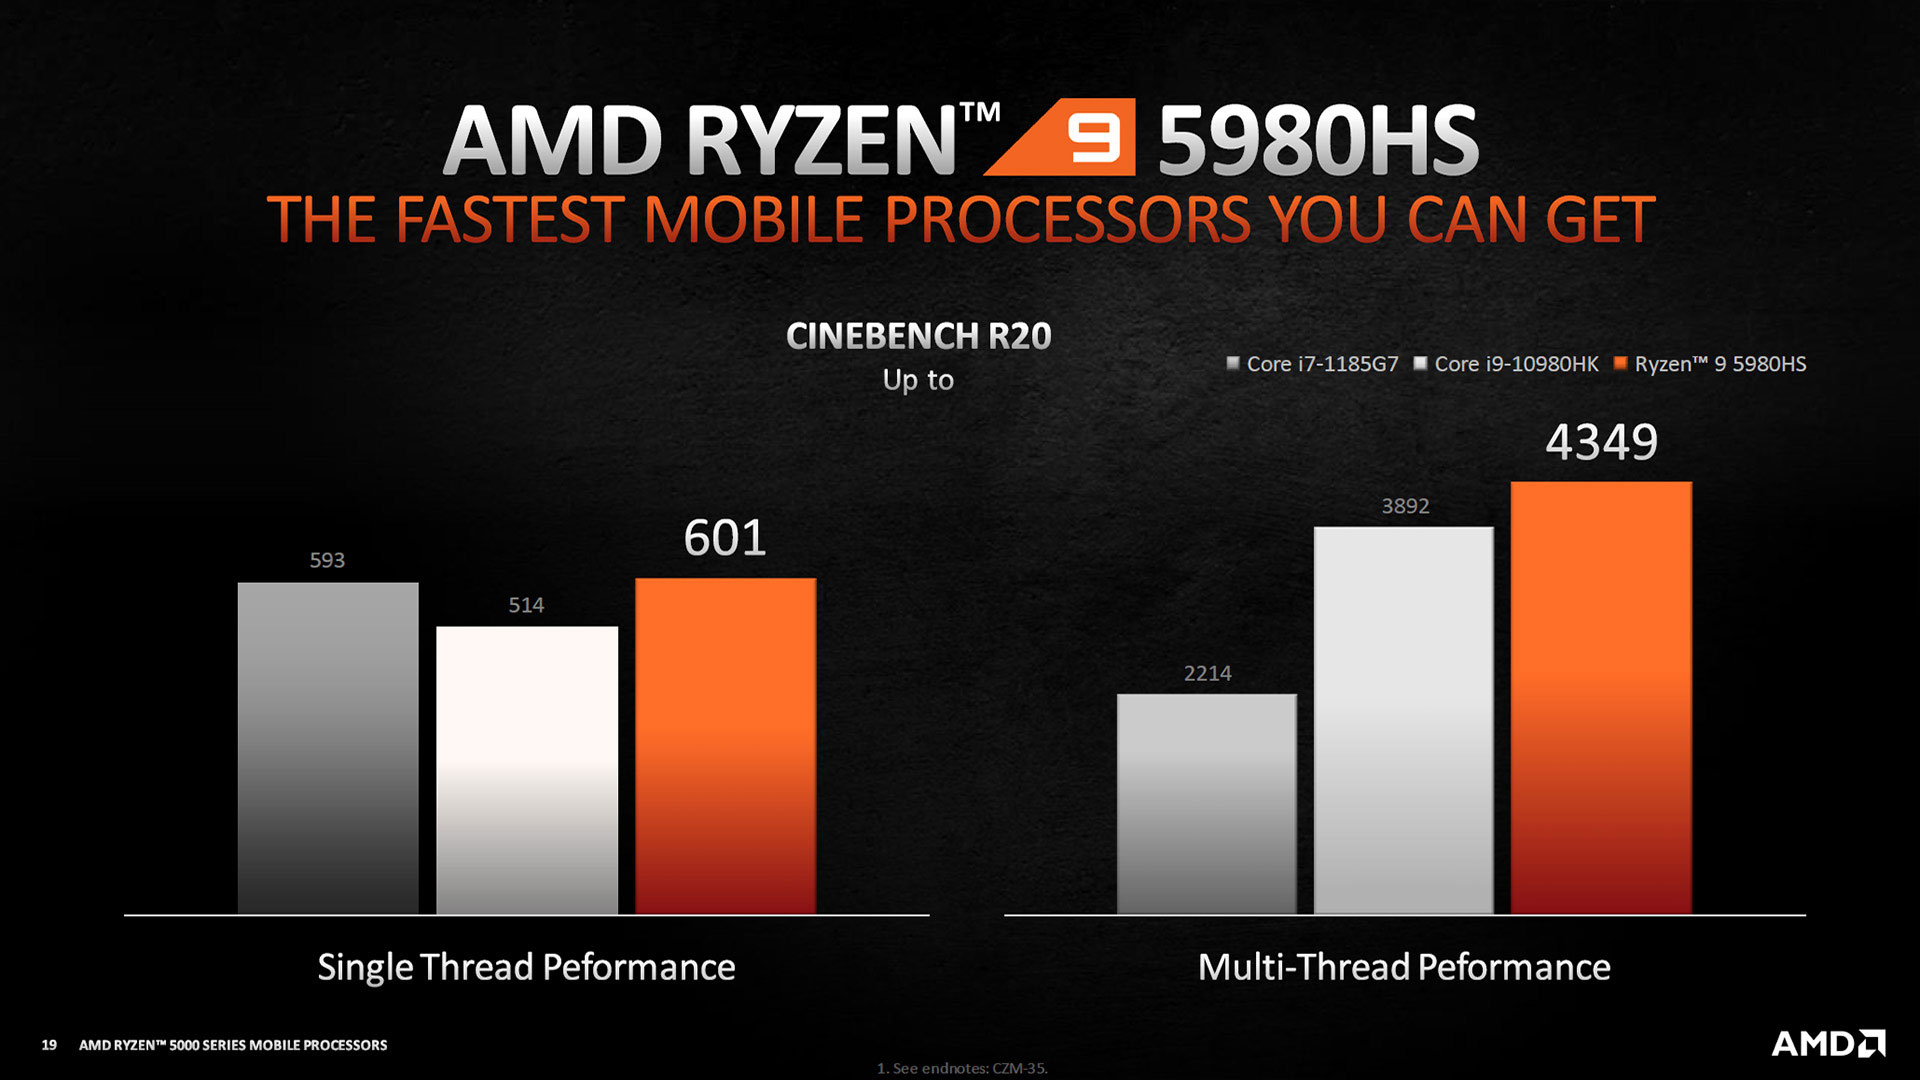 Complete list of AMD Ryzen 9 laptops (6900HX, 6900HS, 5900HX), with